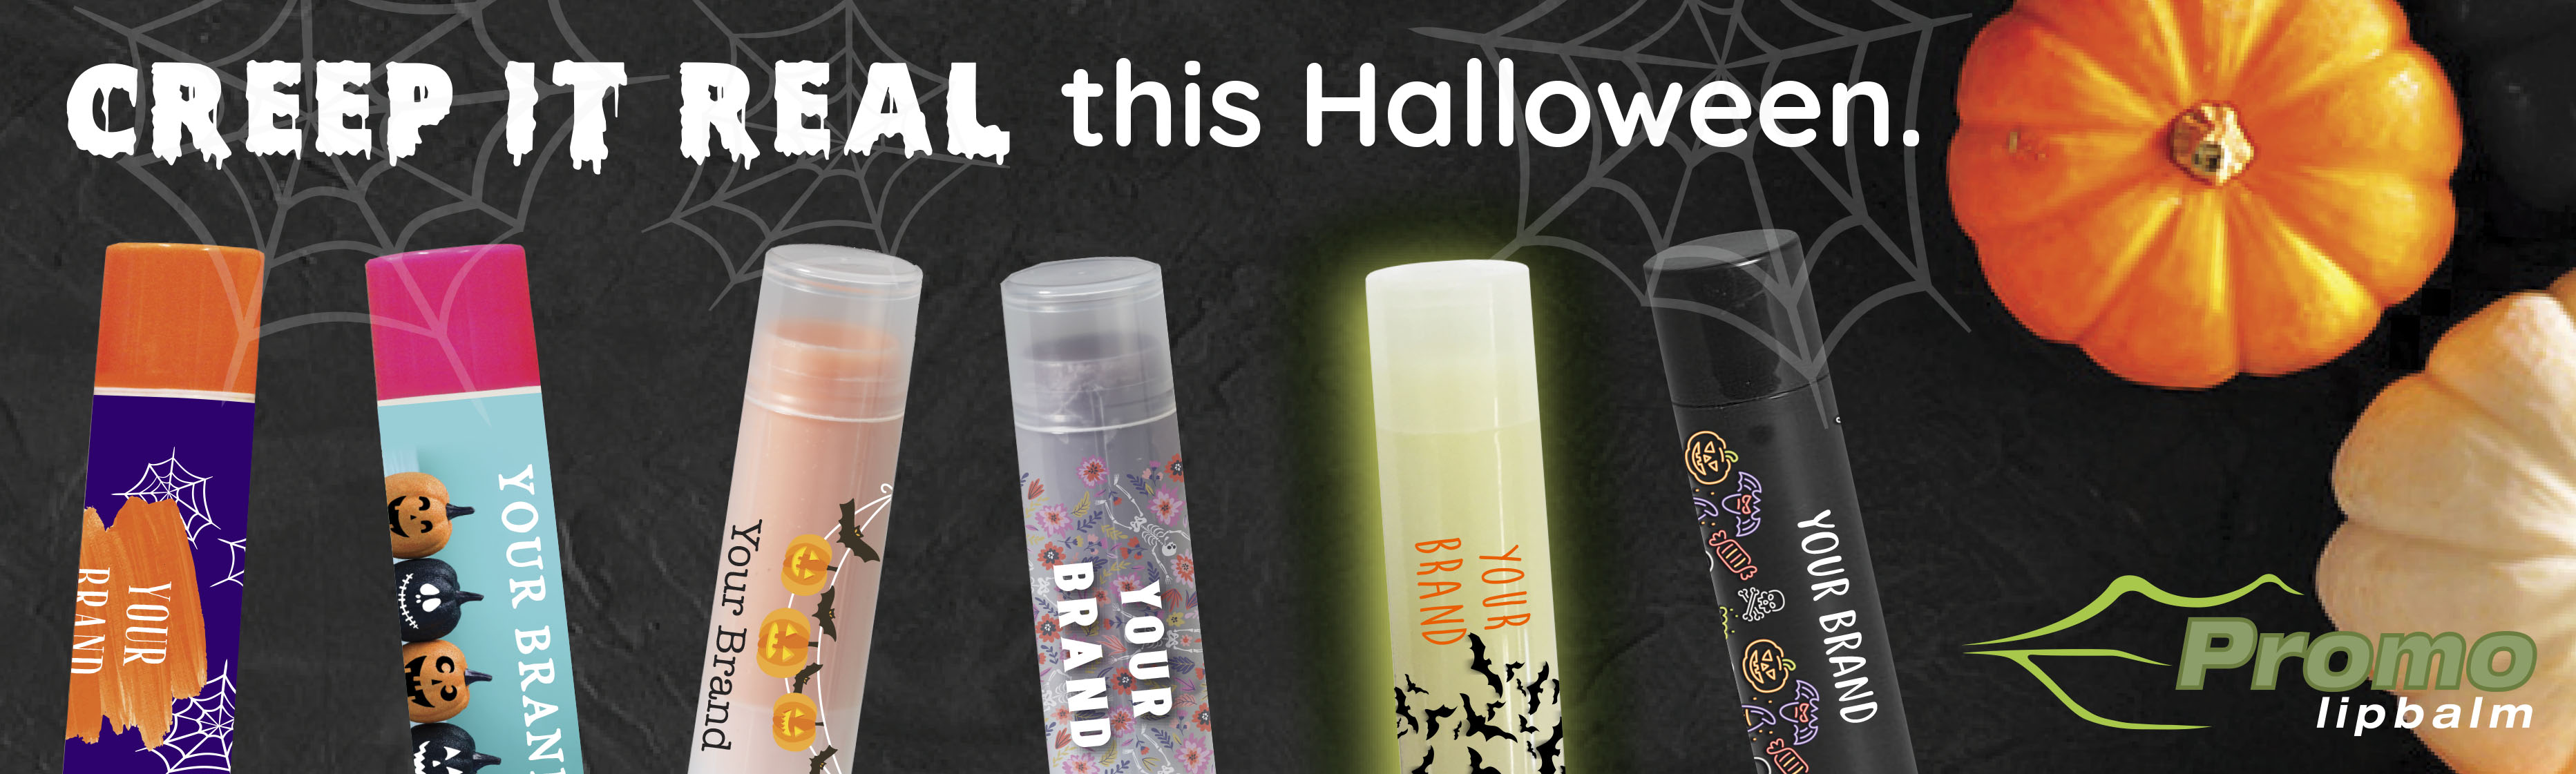 Promo Lip Balm - Halloween Lip Balm Web Ad